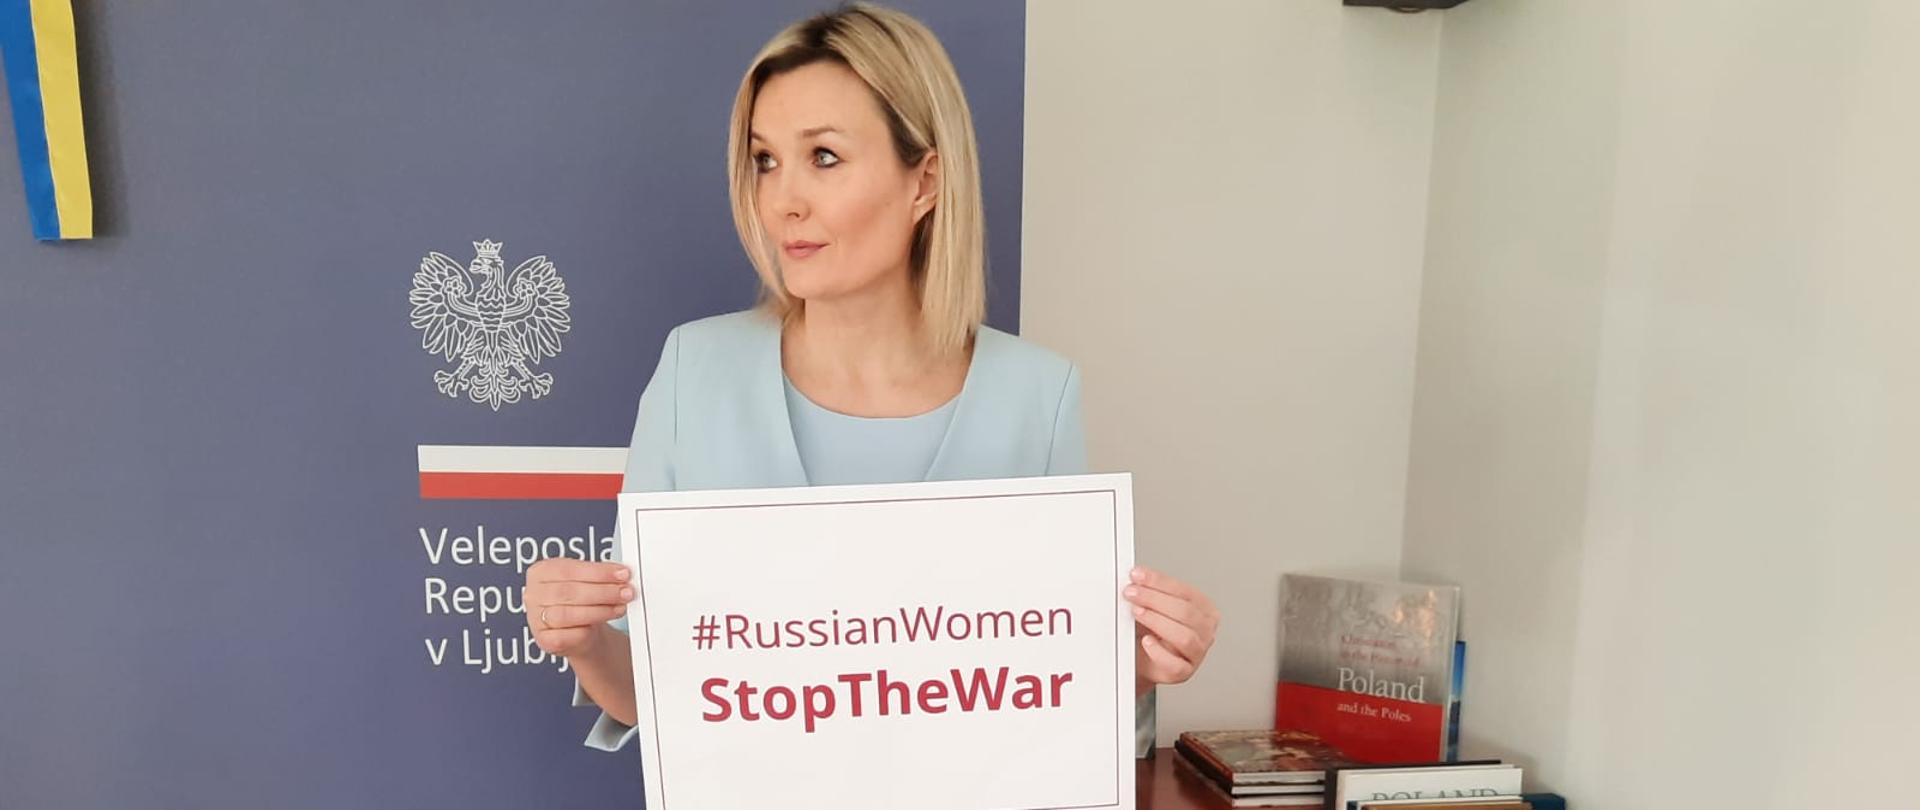 Soproga veleposlanika Republike Poljske v Sloveniji Joanna Olendzka - #RussianWomenStopTheWar